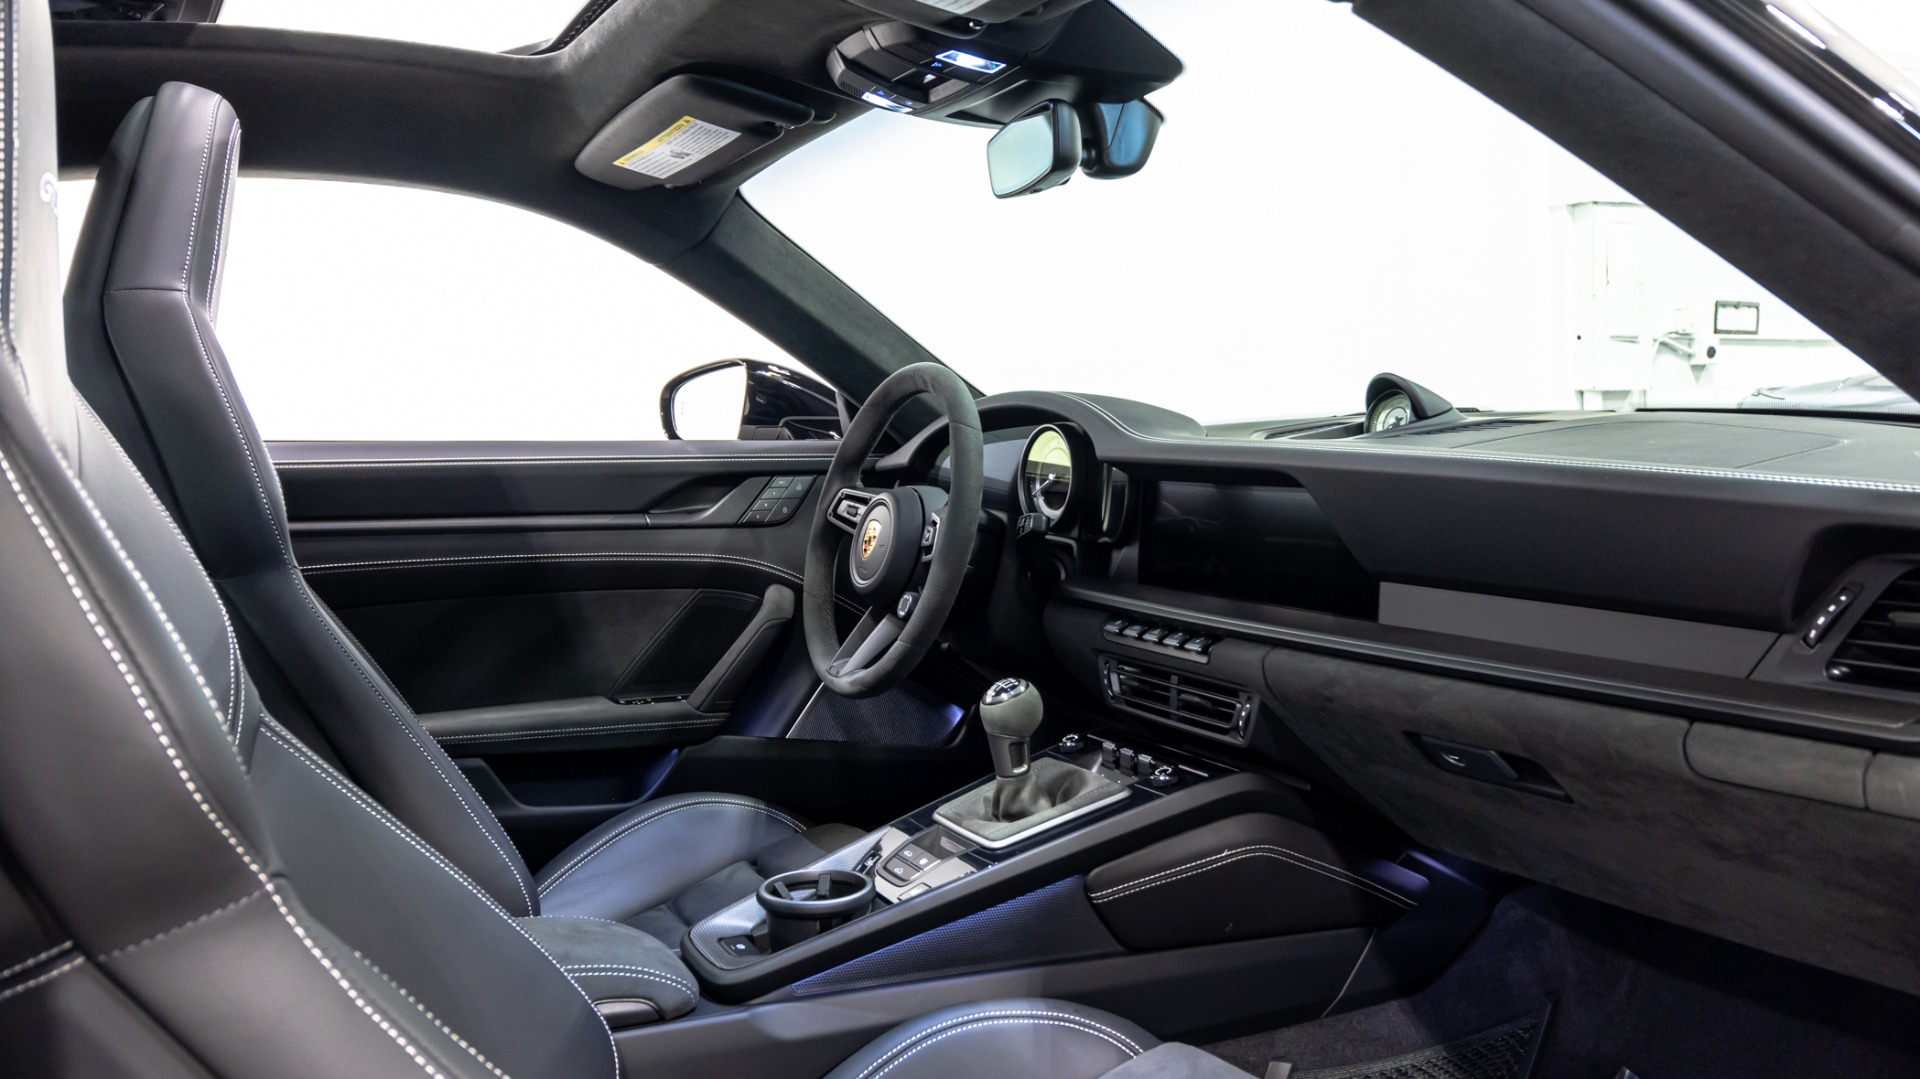 NEW 2023 Porsche 911 Carrera GTS (480hp) - Interior and Exterior Details 